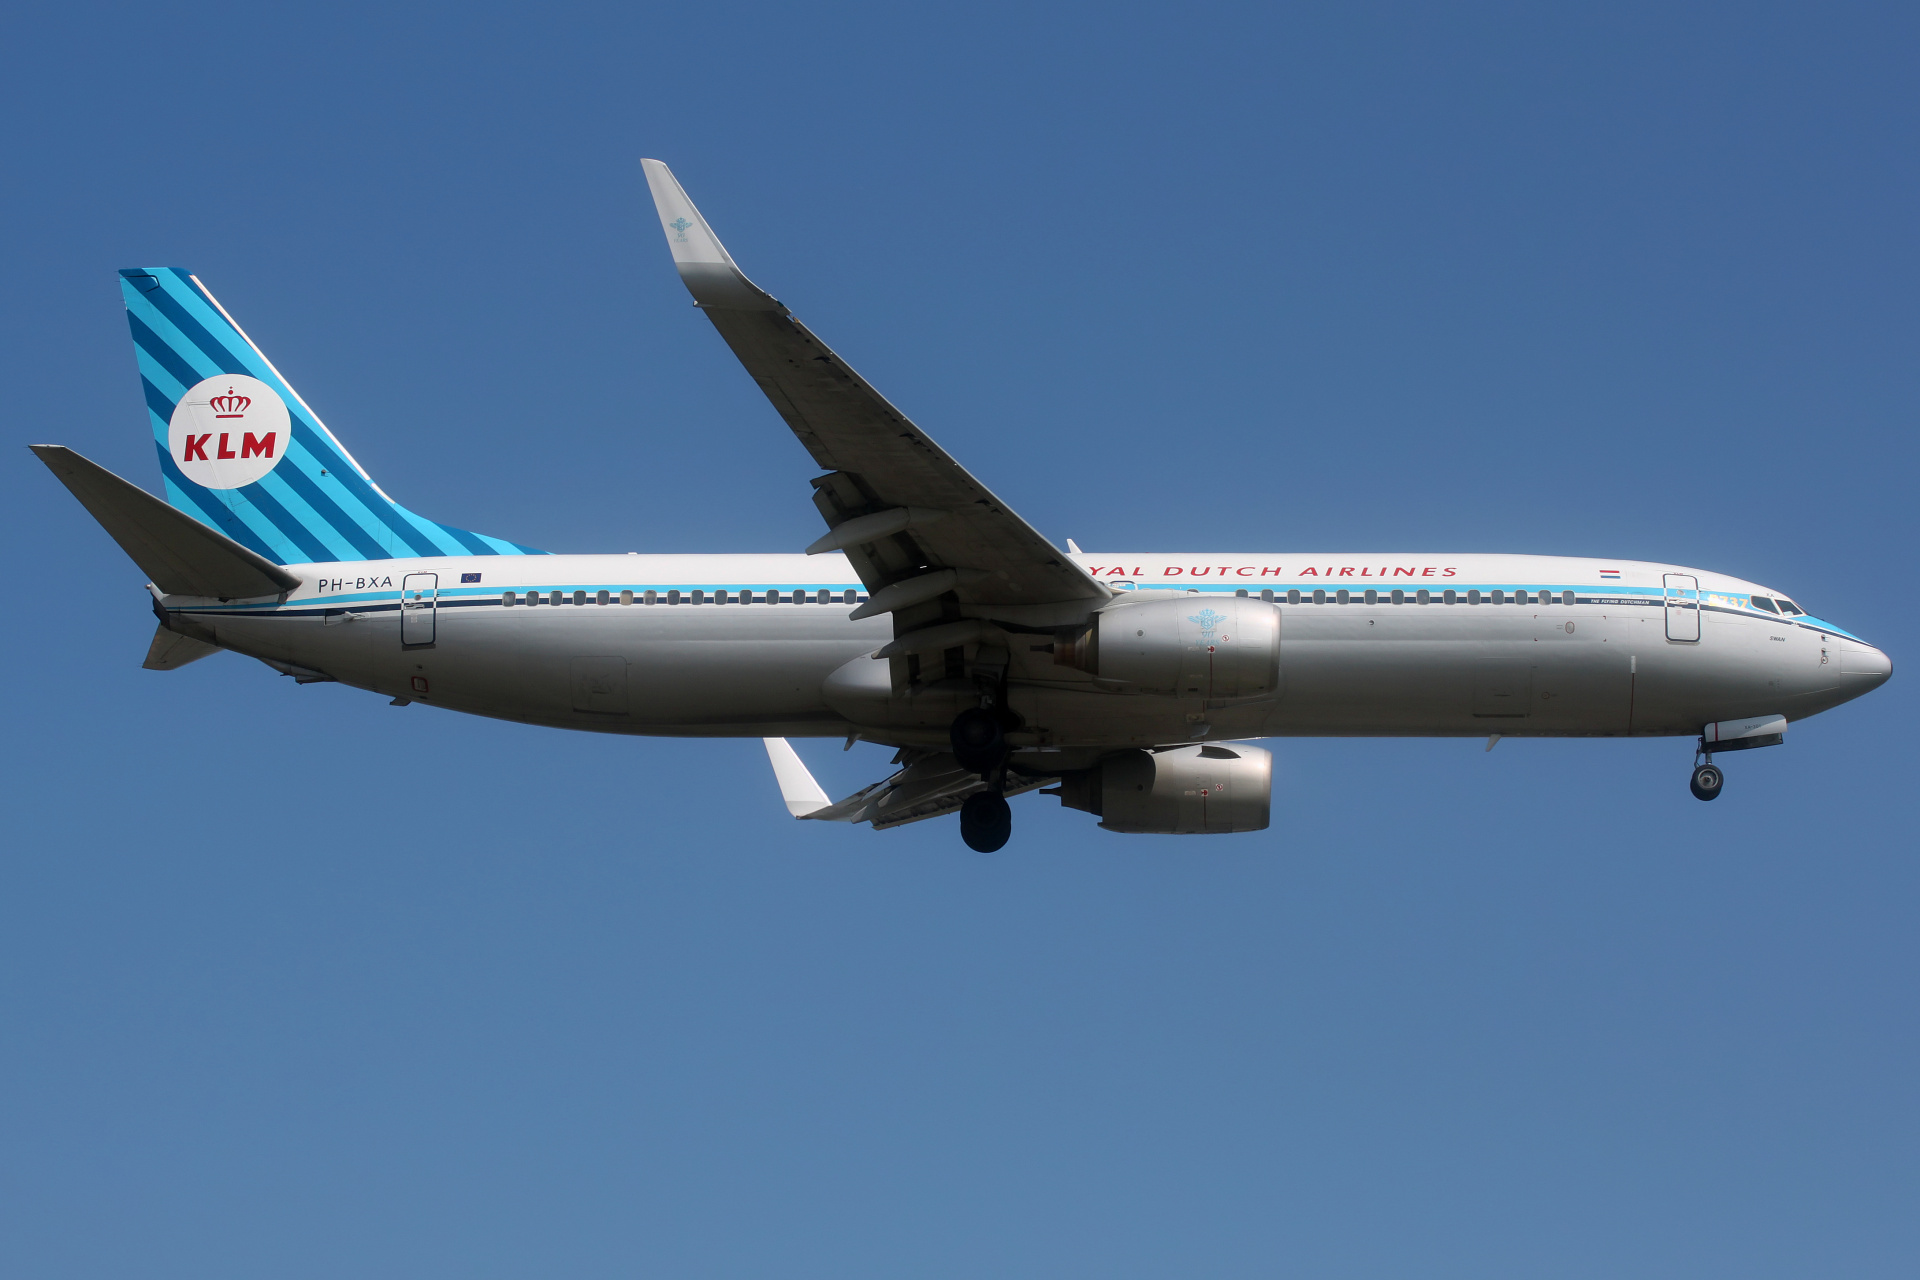 PH-BXA (retro livery) (Aircraft » EPWA Spotting » Boeing 737-800 » KLM Royal Dutch Airlines)